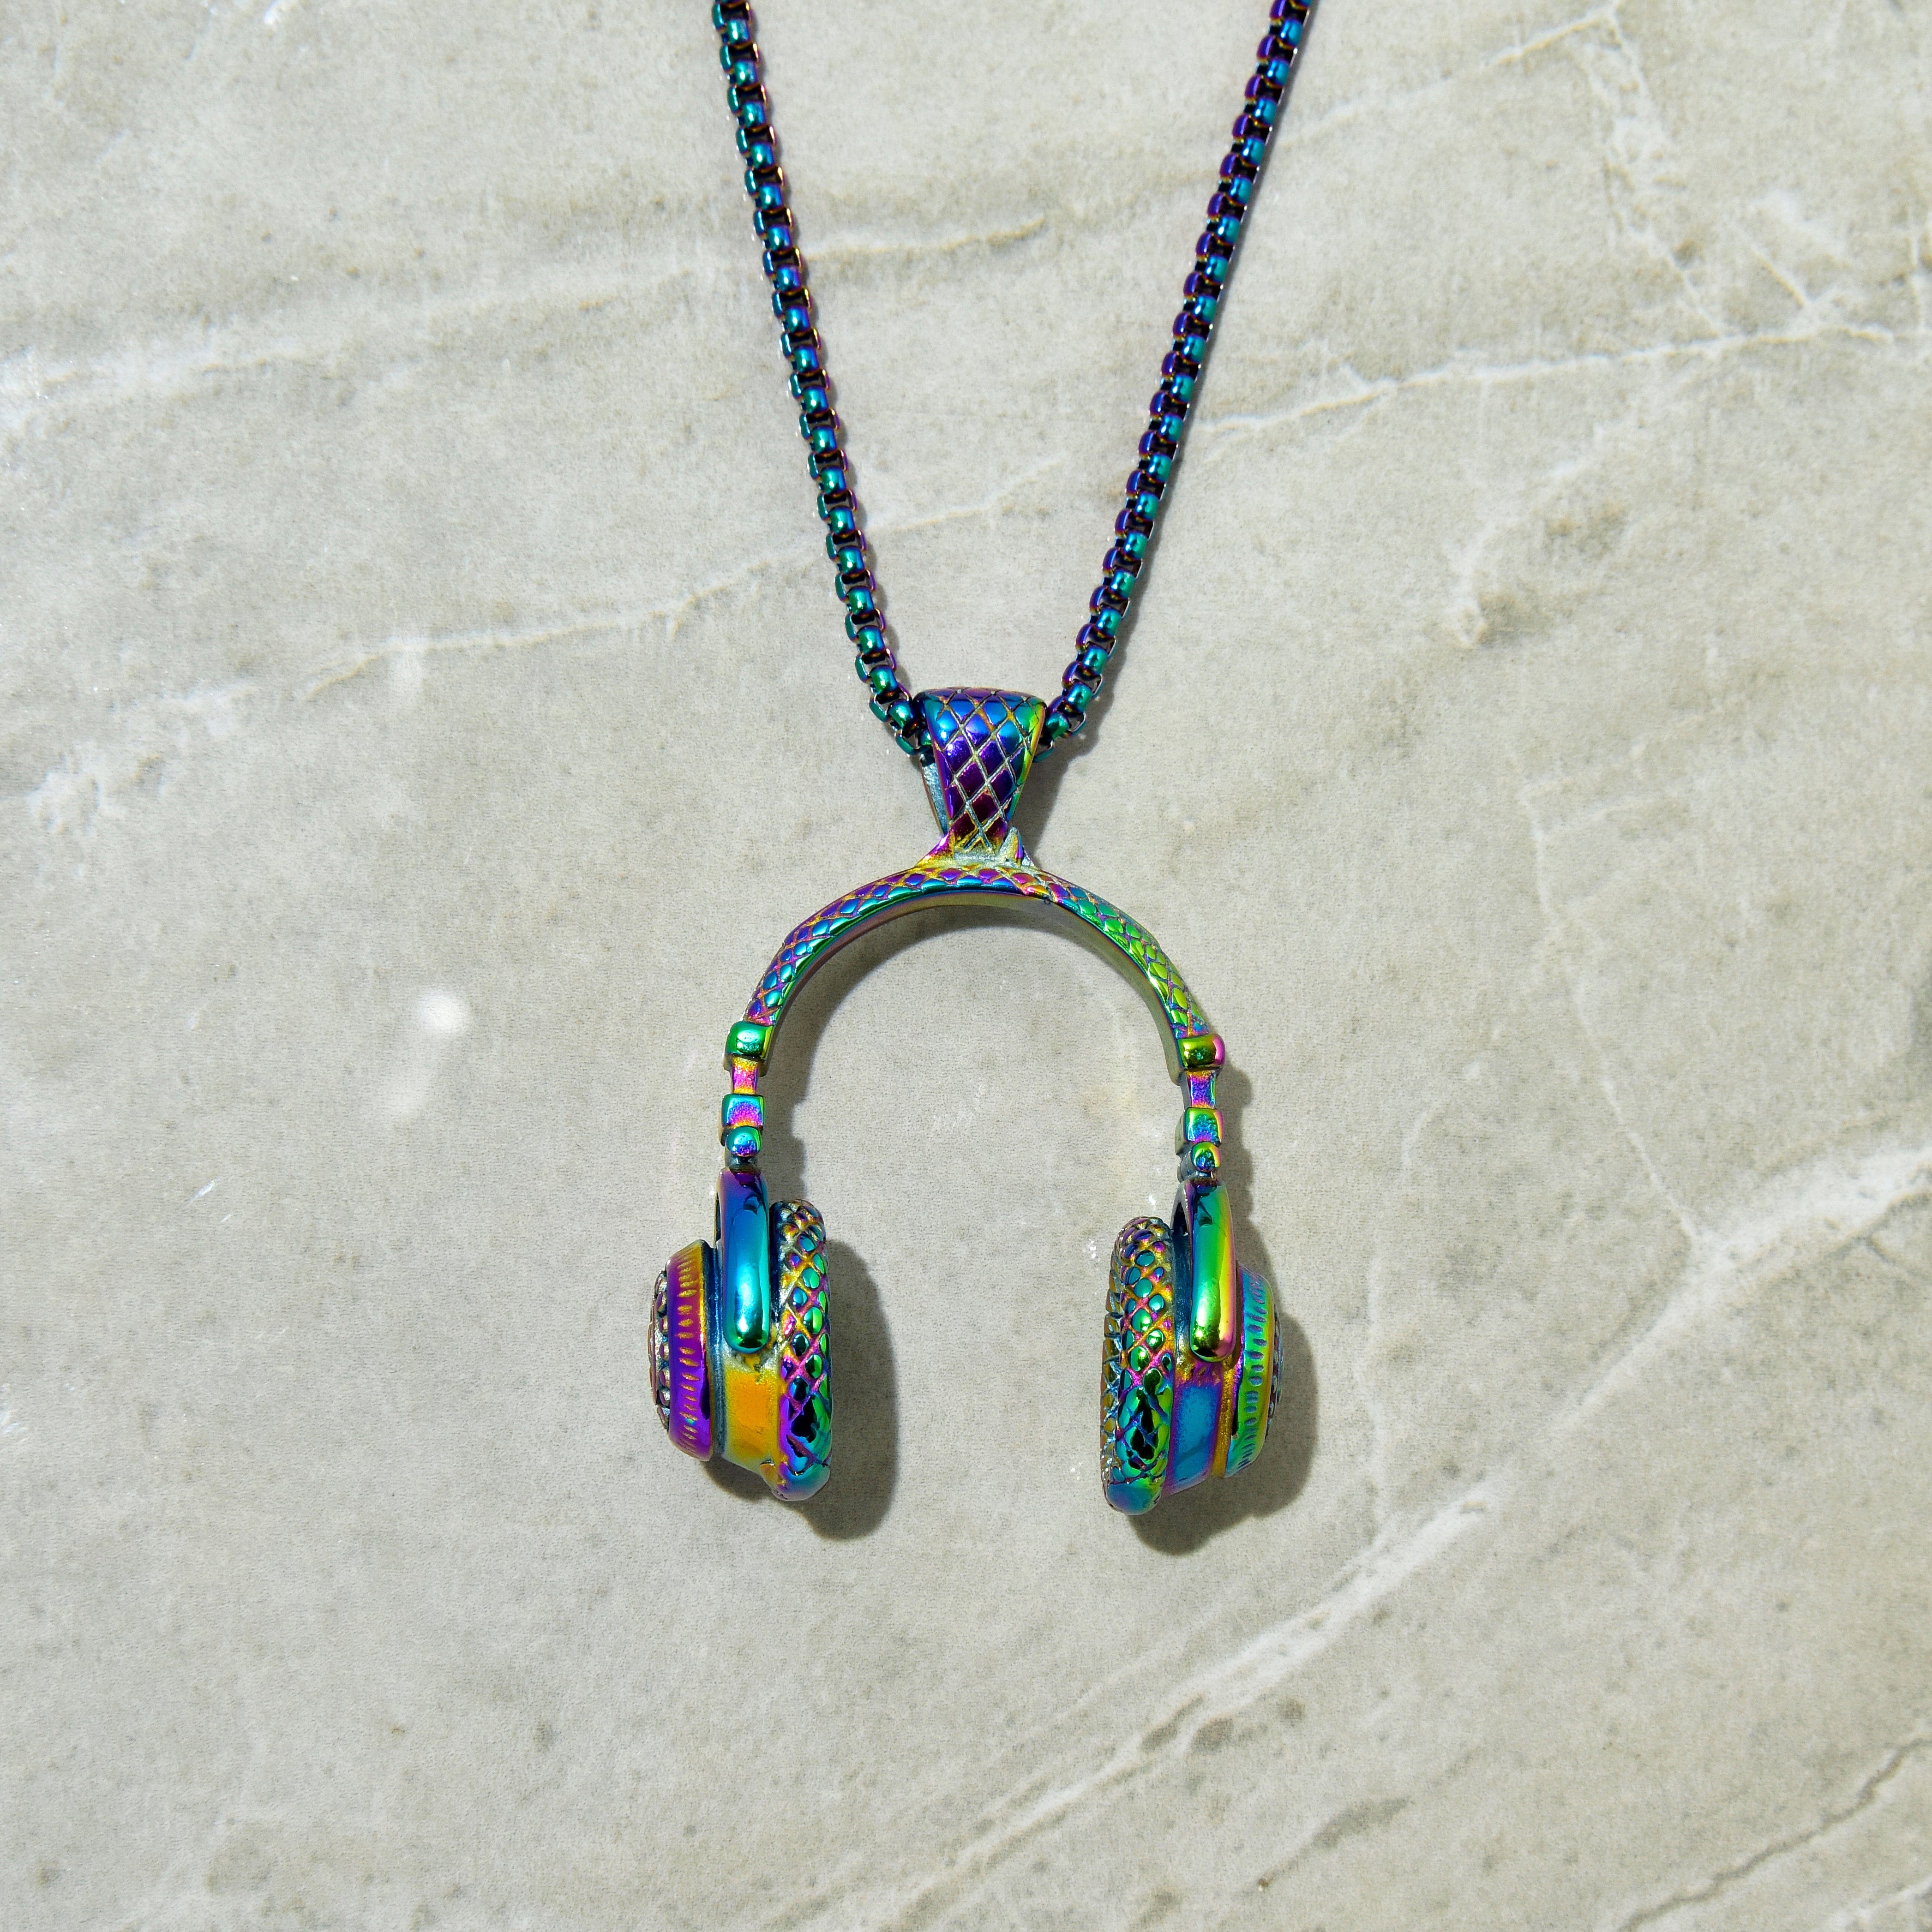 Kalifano Steel Hearts Jewelry Aurora Borealis Large Headphones Steel Hearts Necklace SHN506-AB